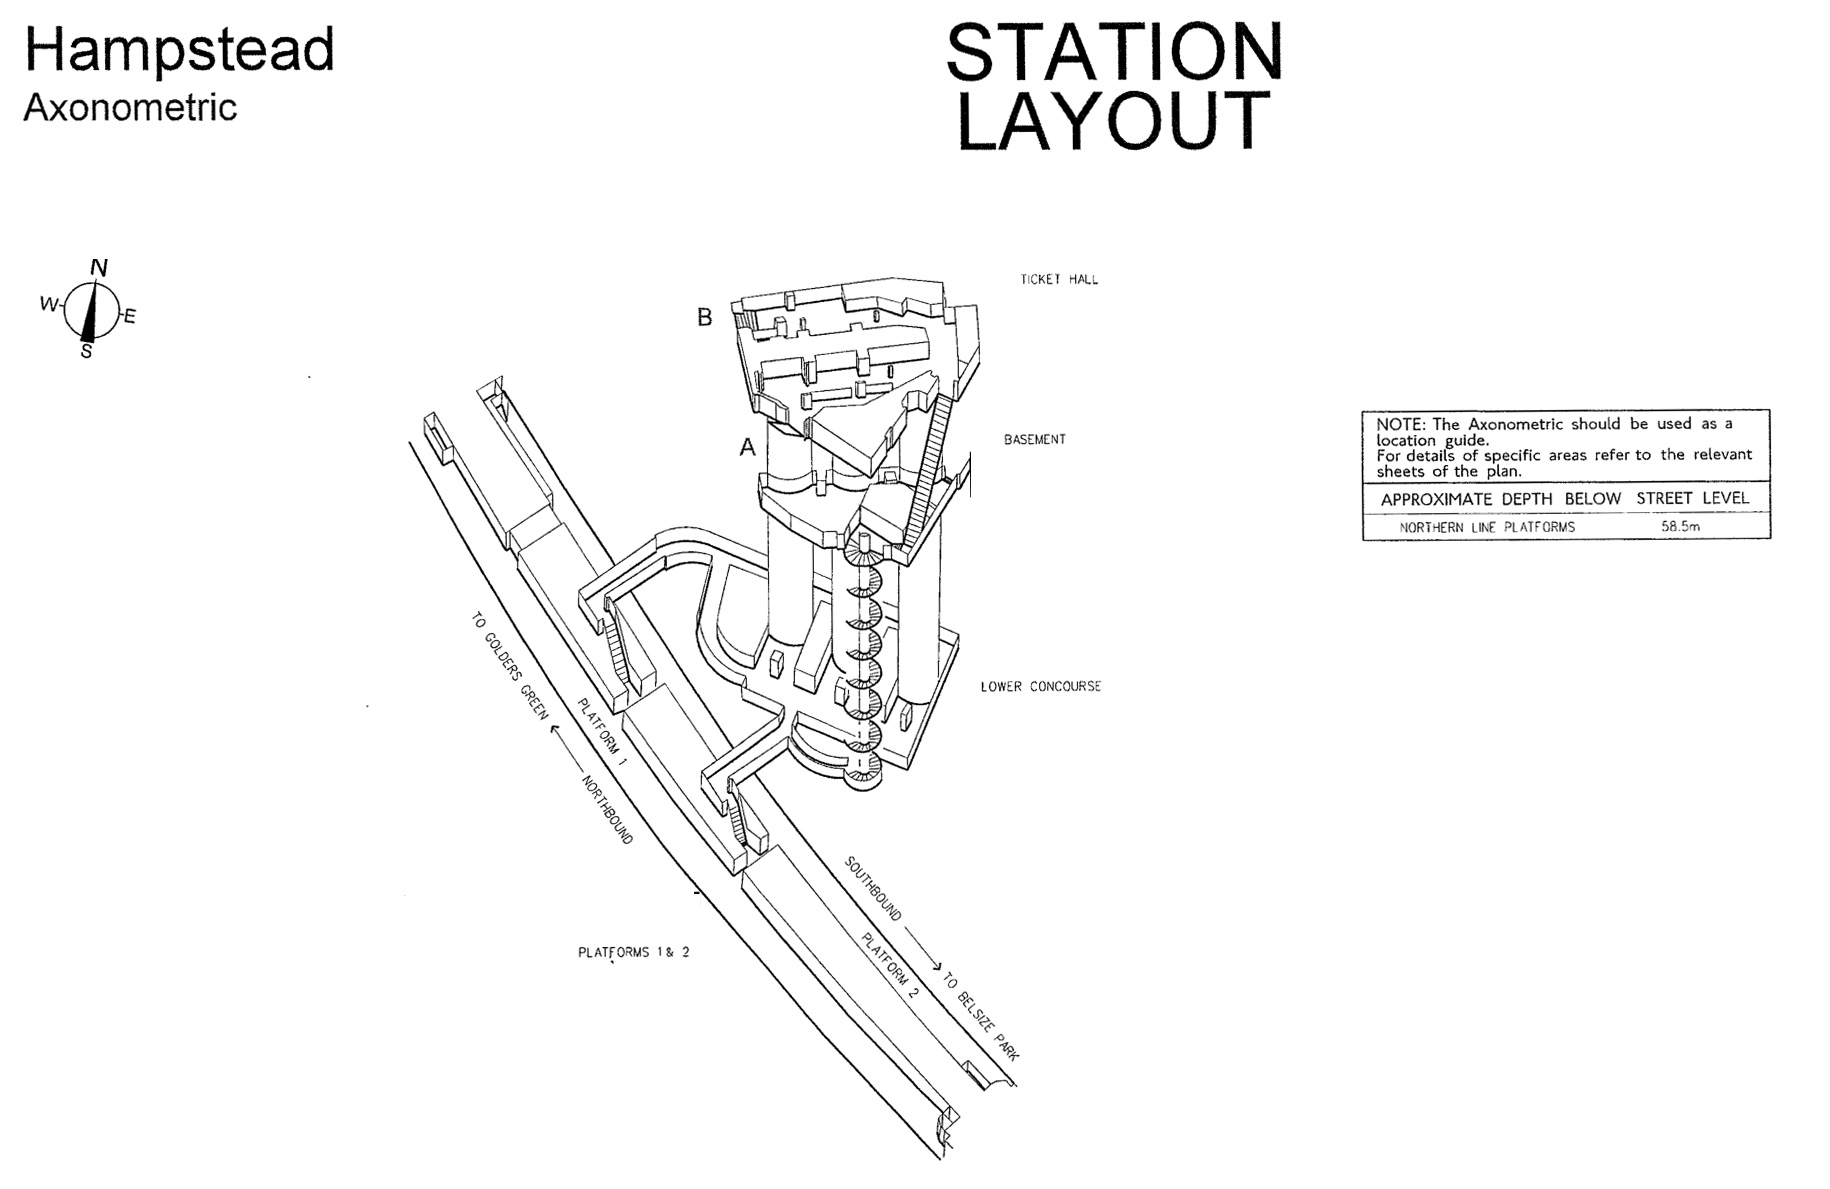 diagramme-3d-station-metro-londres-hampstead-02